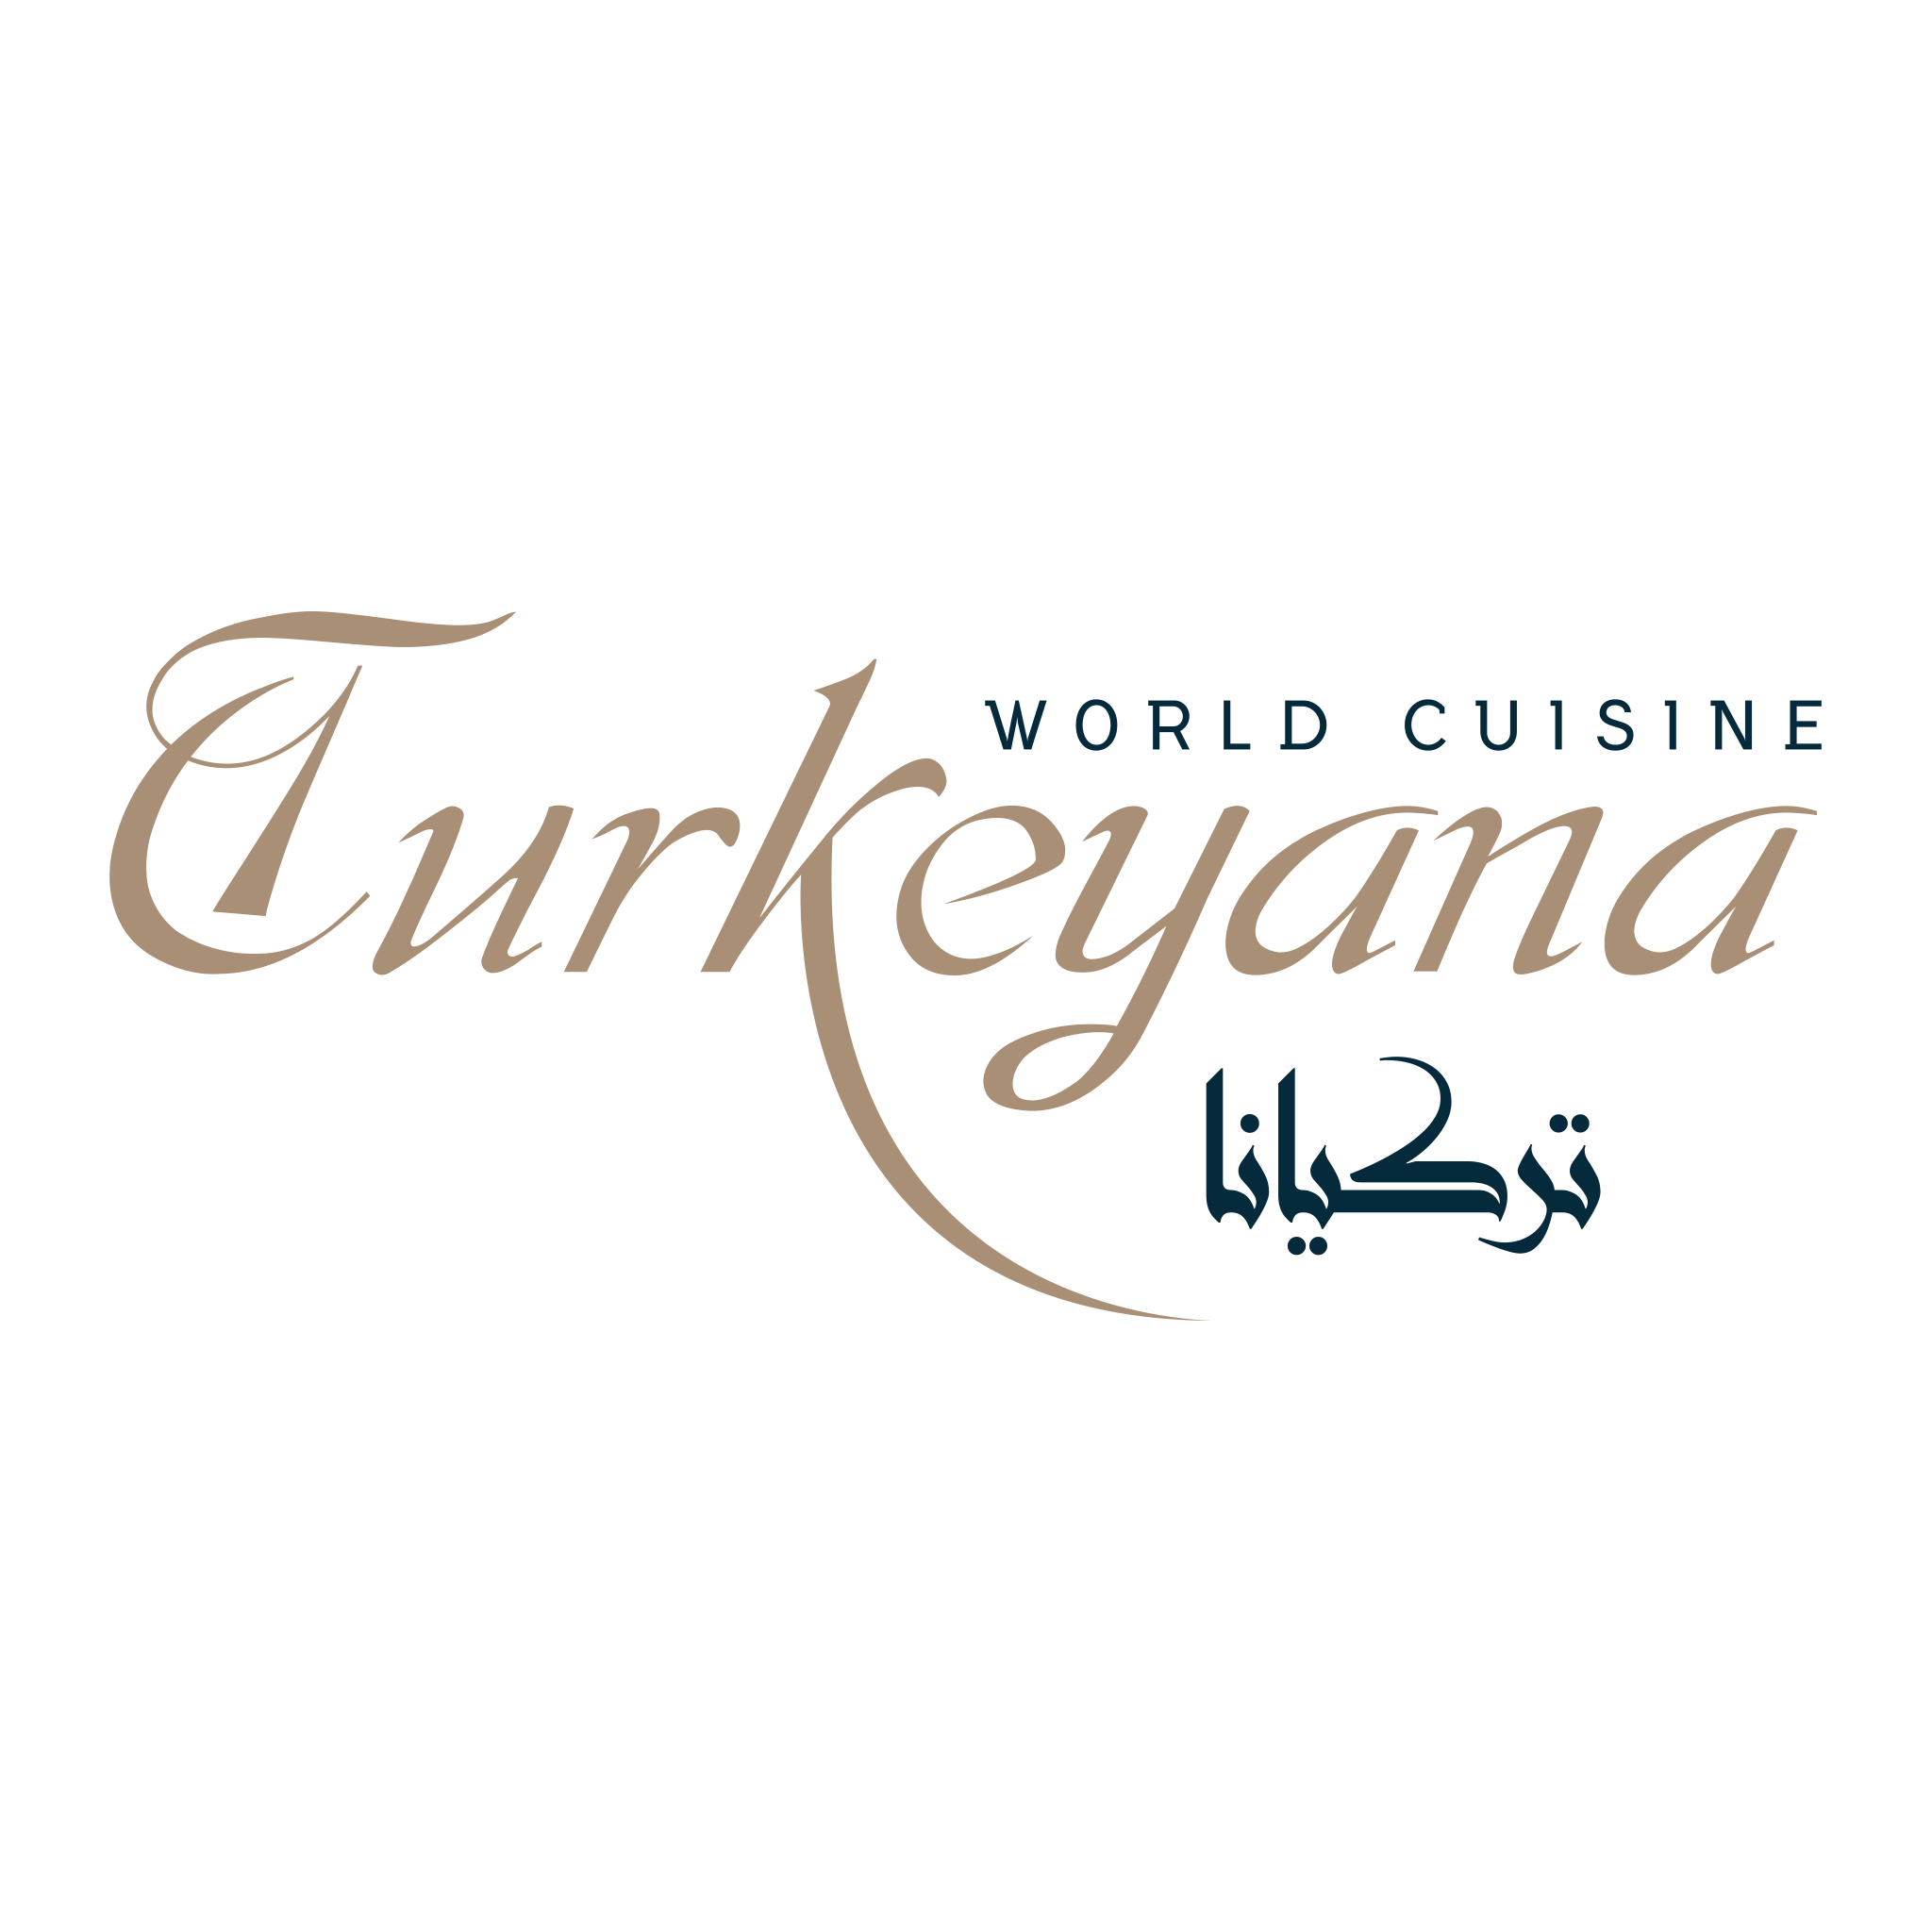 turkeyana restaurant logo